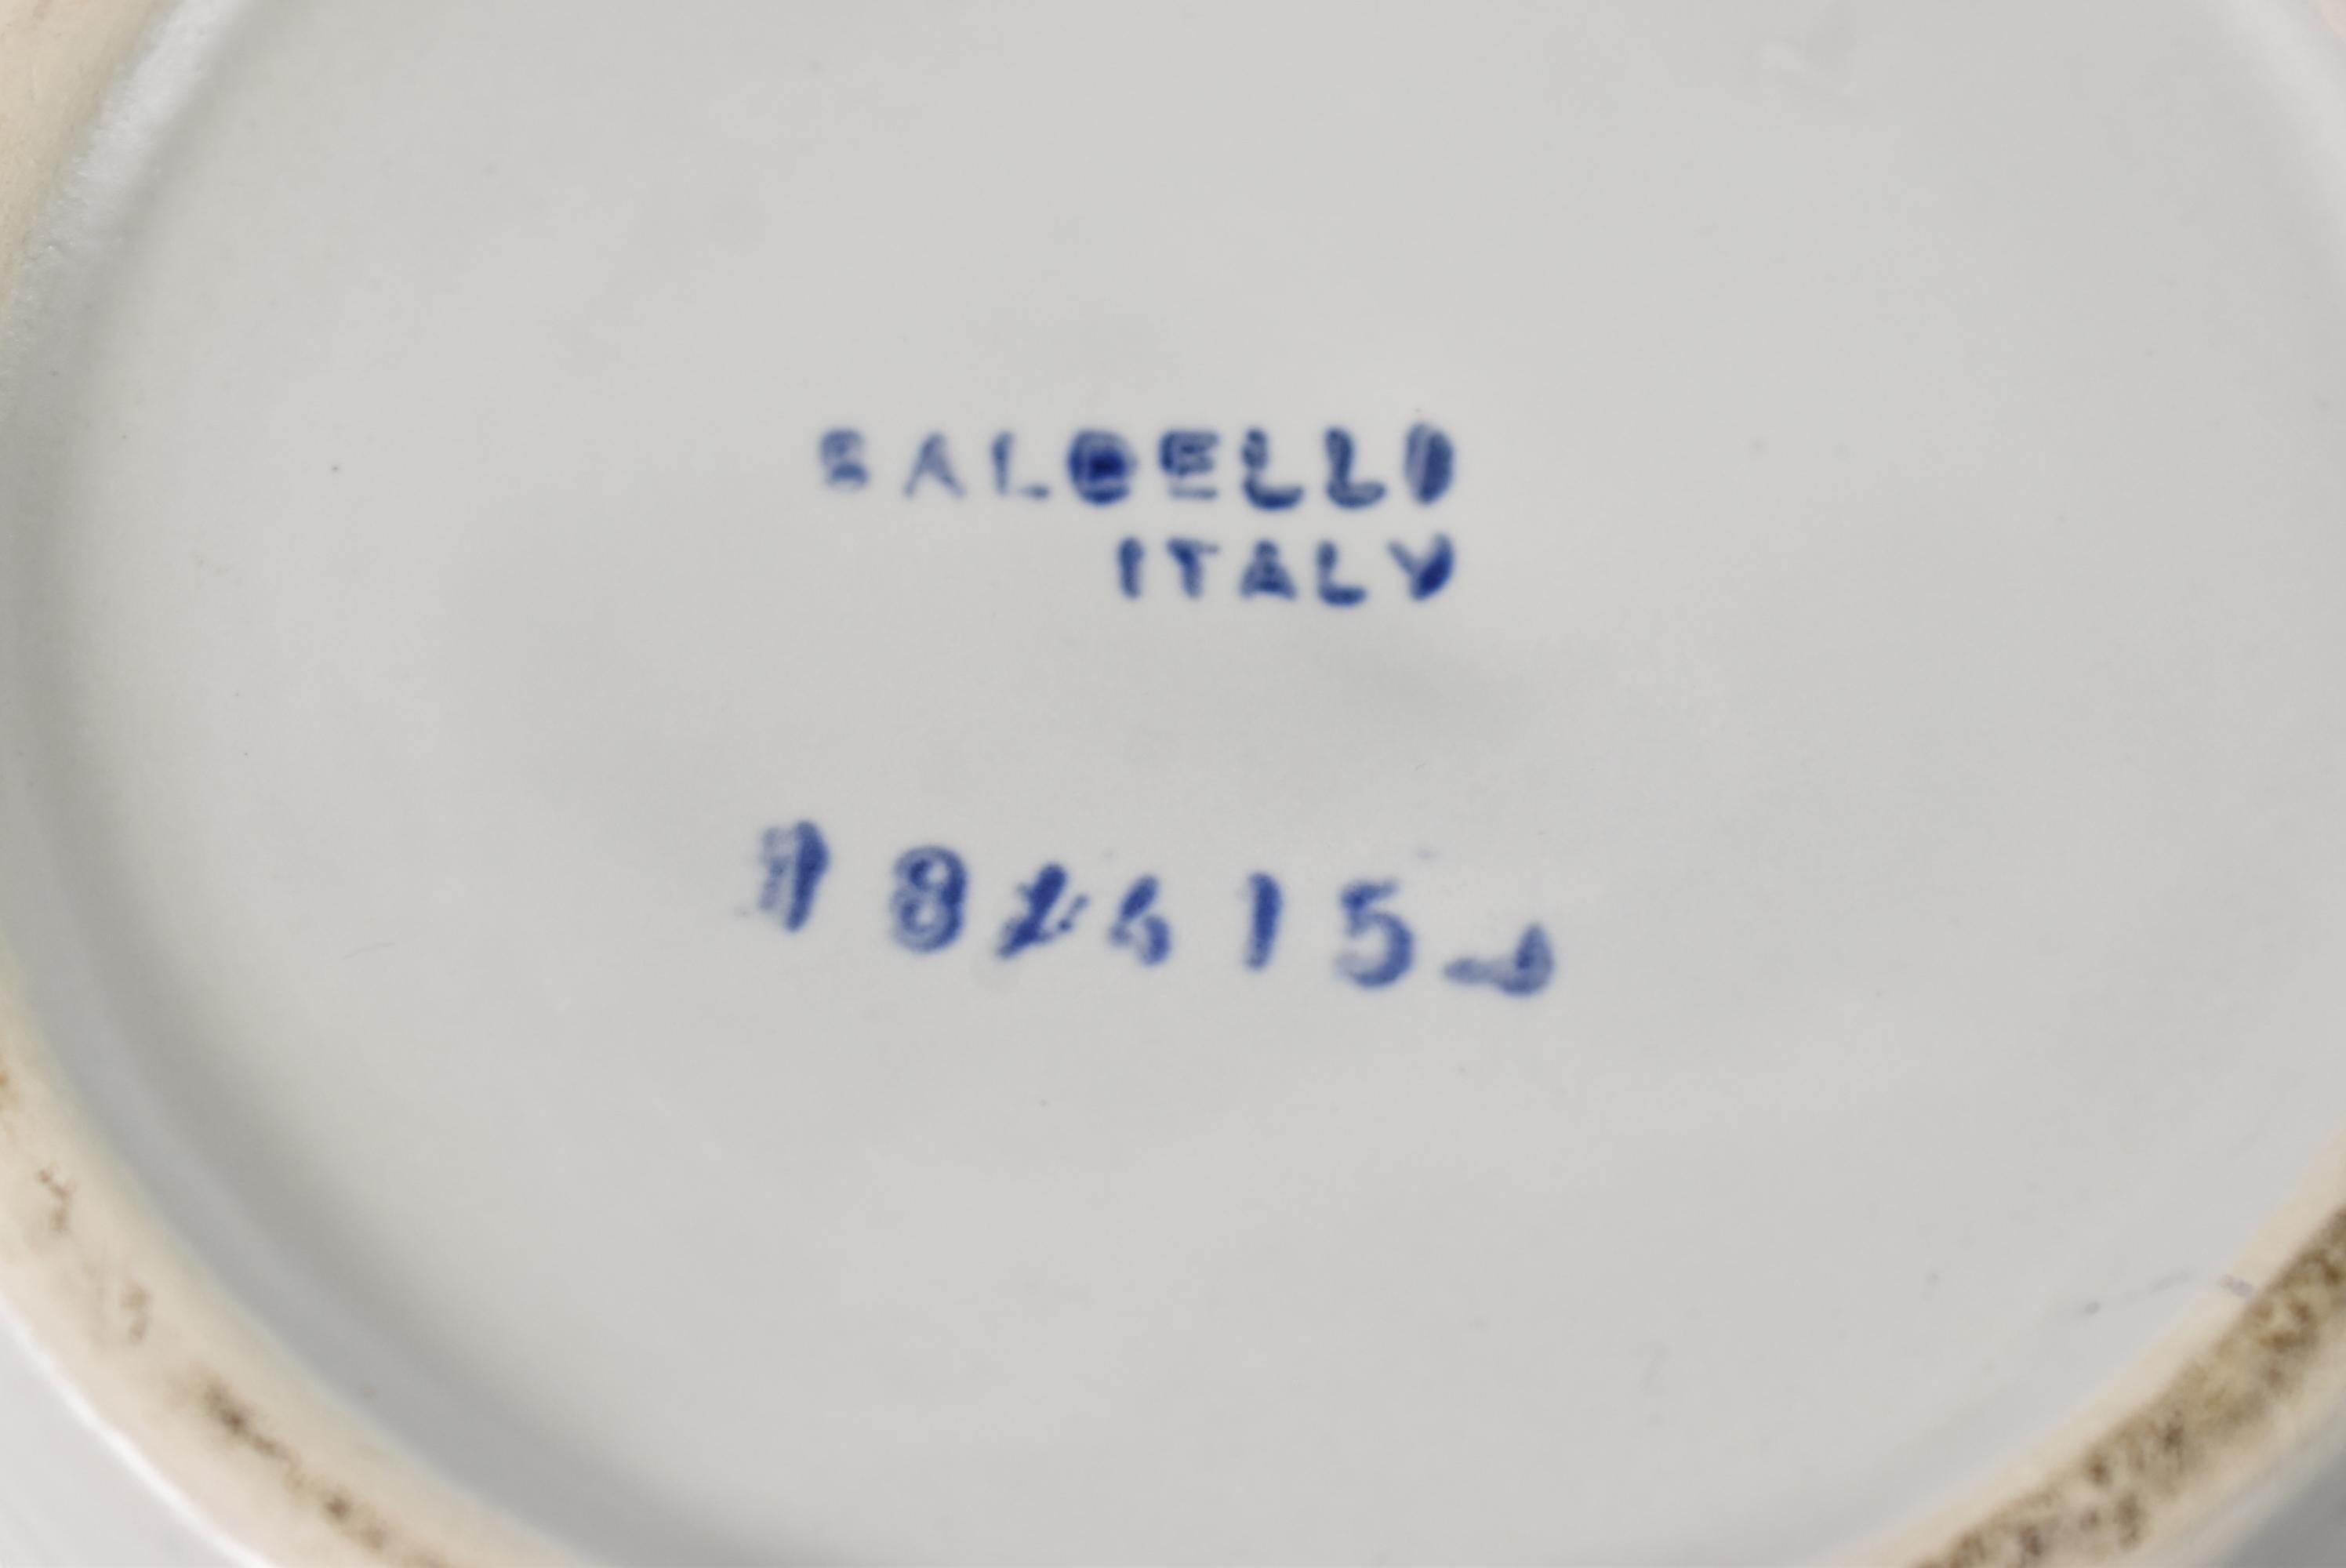 Modern Pair Italian Pottery Covered Jars By Baldelli Circa 1960